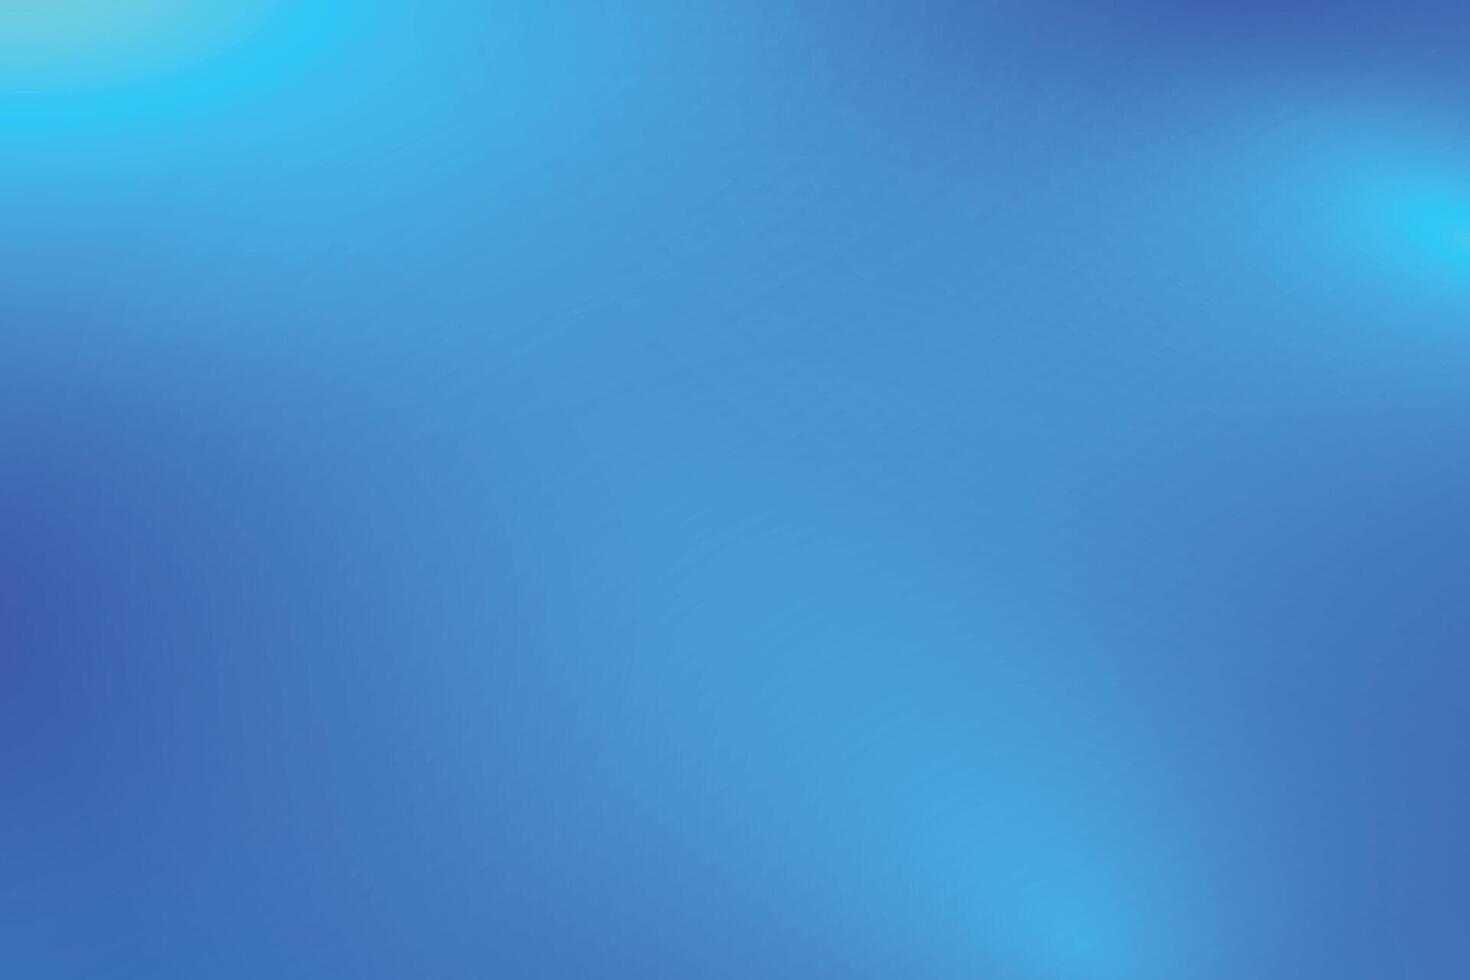 mínimo estilo azul degradado resumen fondo de pantalla con difuminar efecto vector